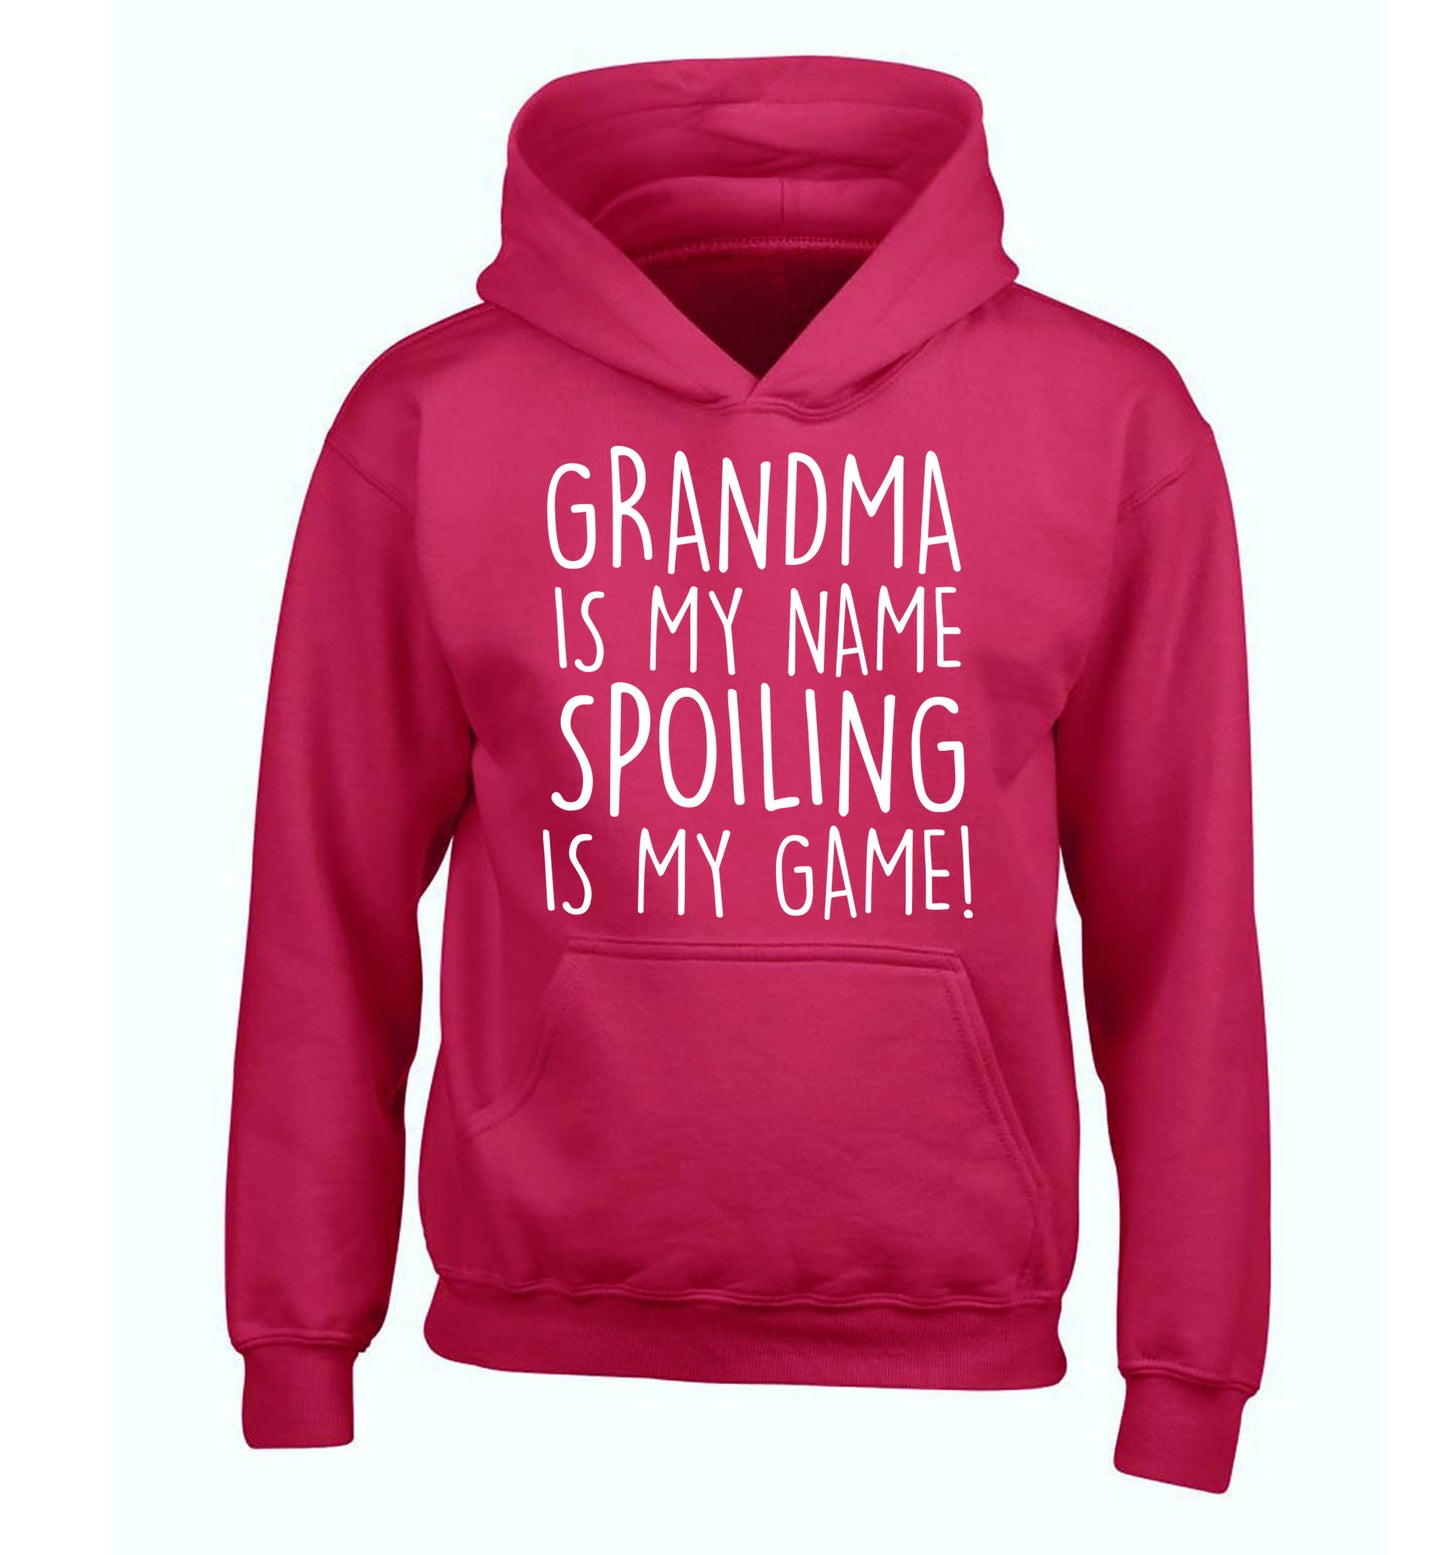 Grandma is my name, spoiling is my game children's pink hoodie 12-14 Years